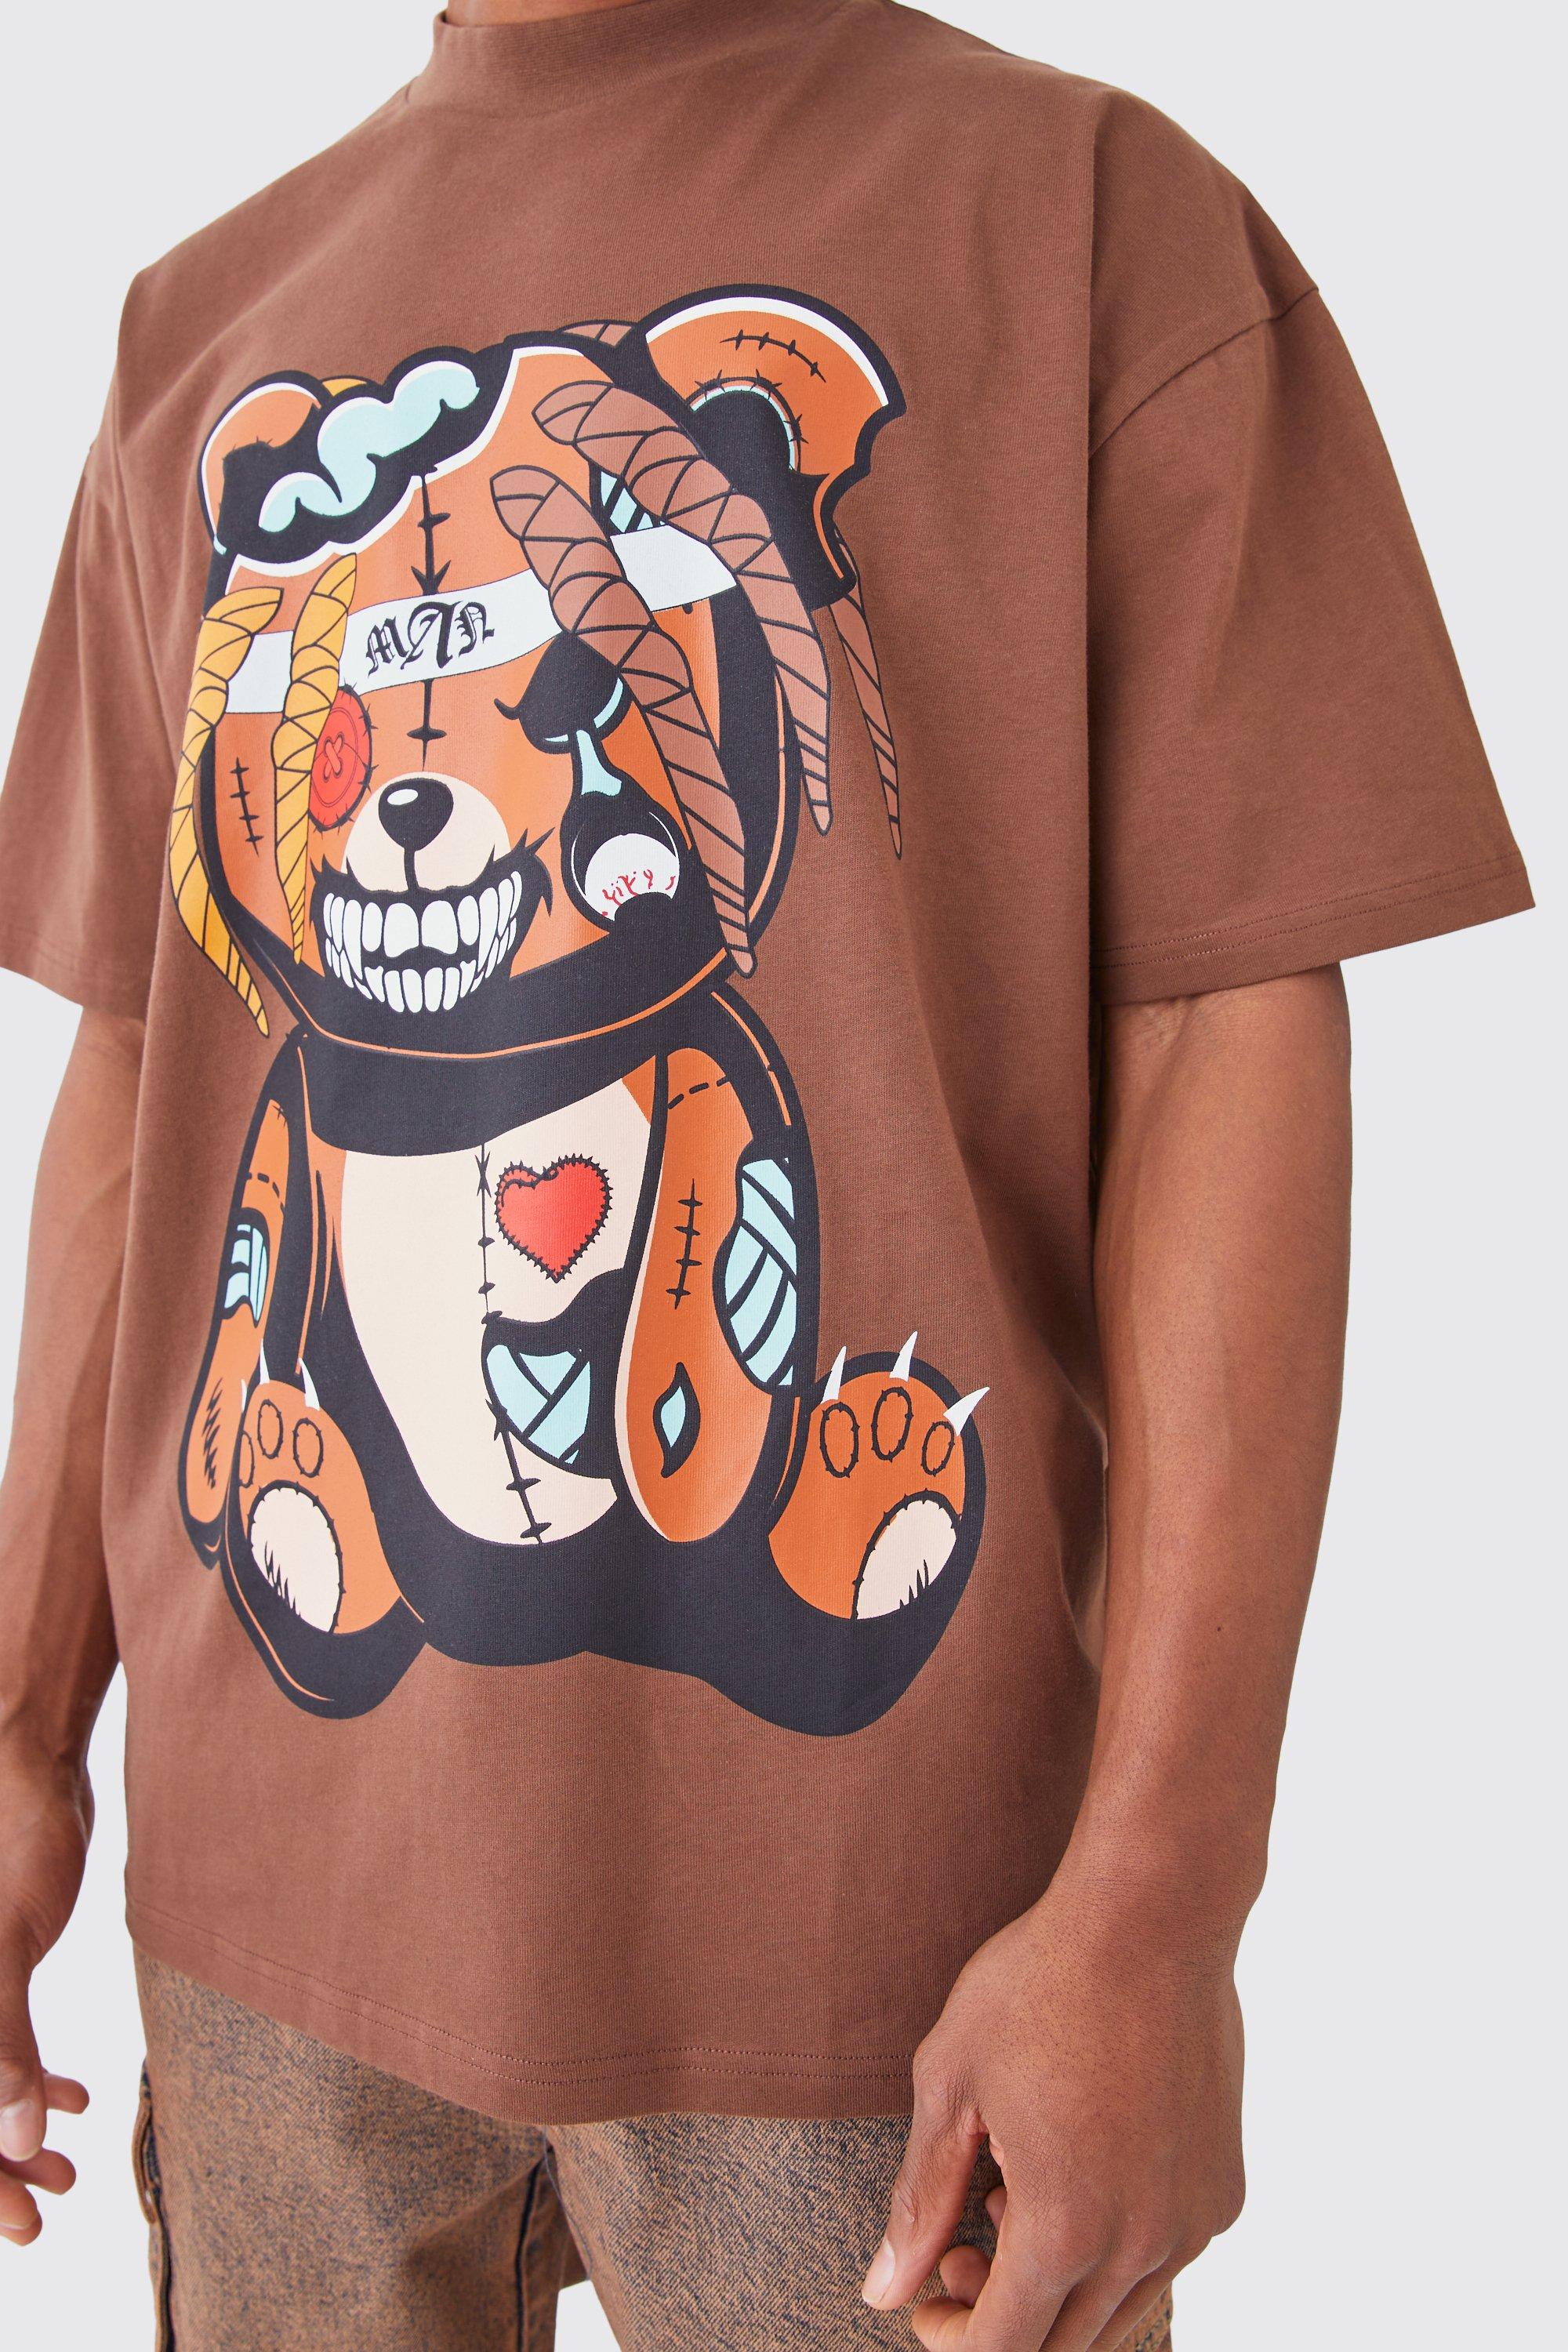 Boohoo UK - shirt - Men's Plus Oversized Angry Teddy Graphic T